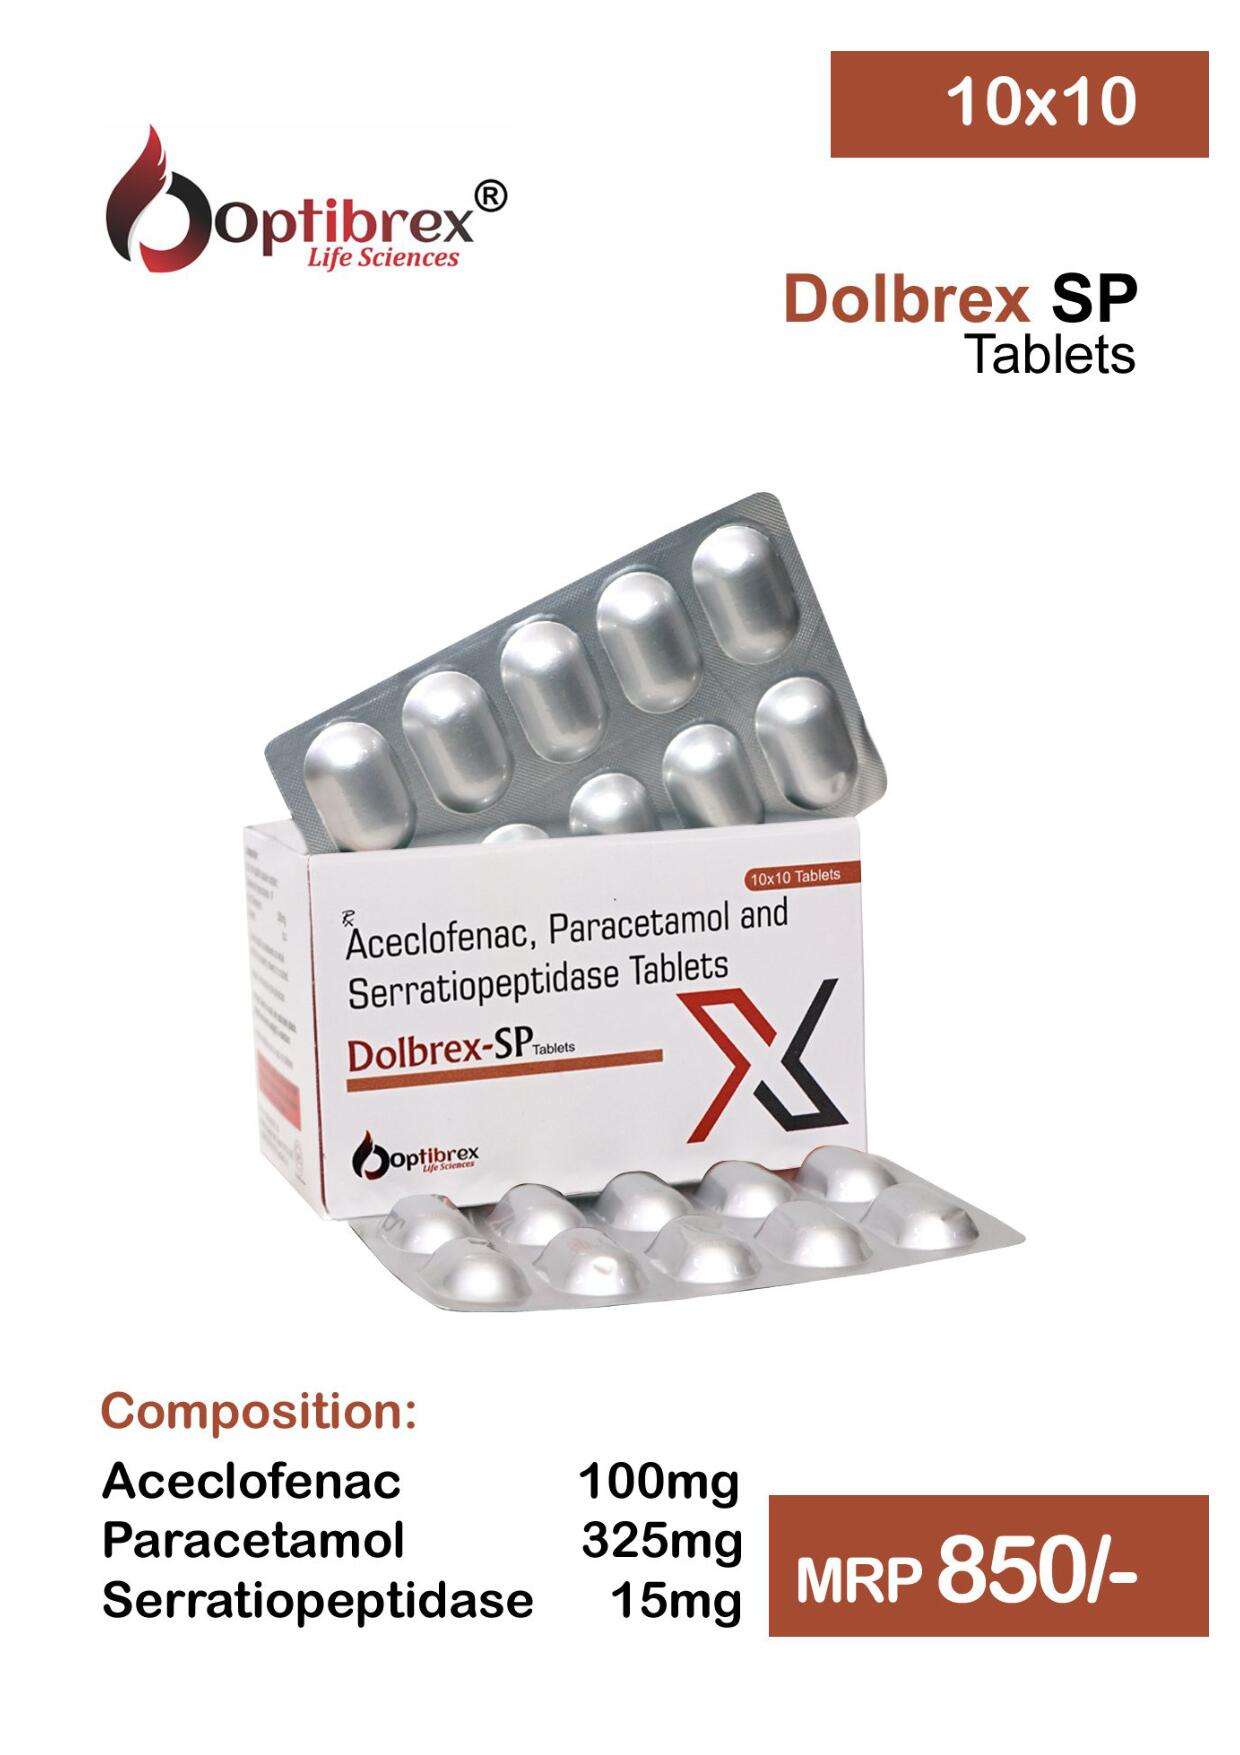 aceclofenac 100 mg+ pcm 325 mg
+ serratiopeptidase (as enteric coated granules) 15mg